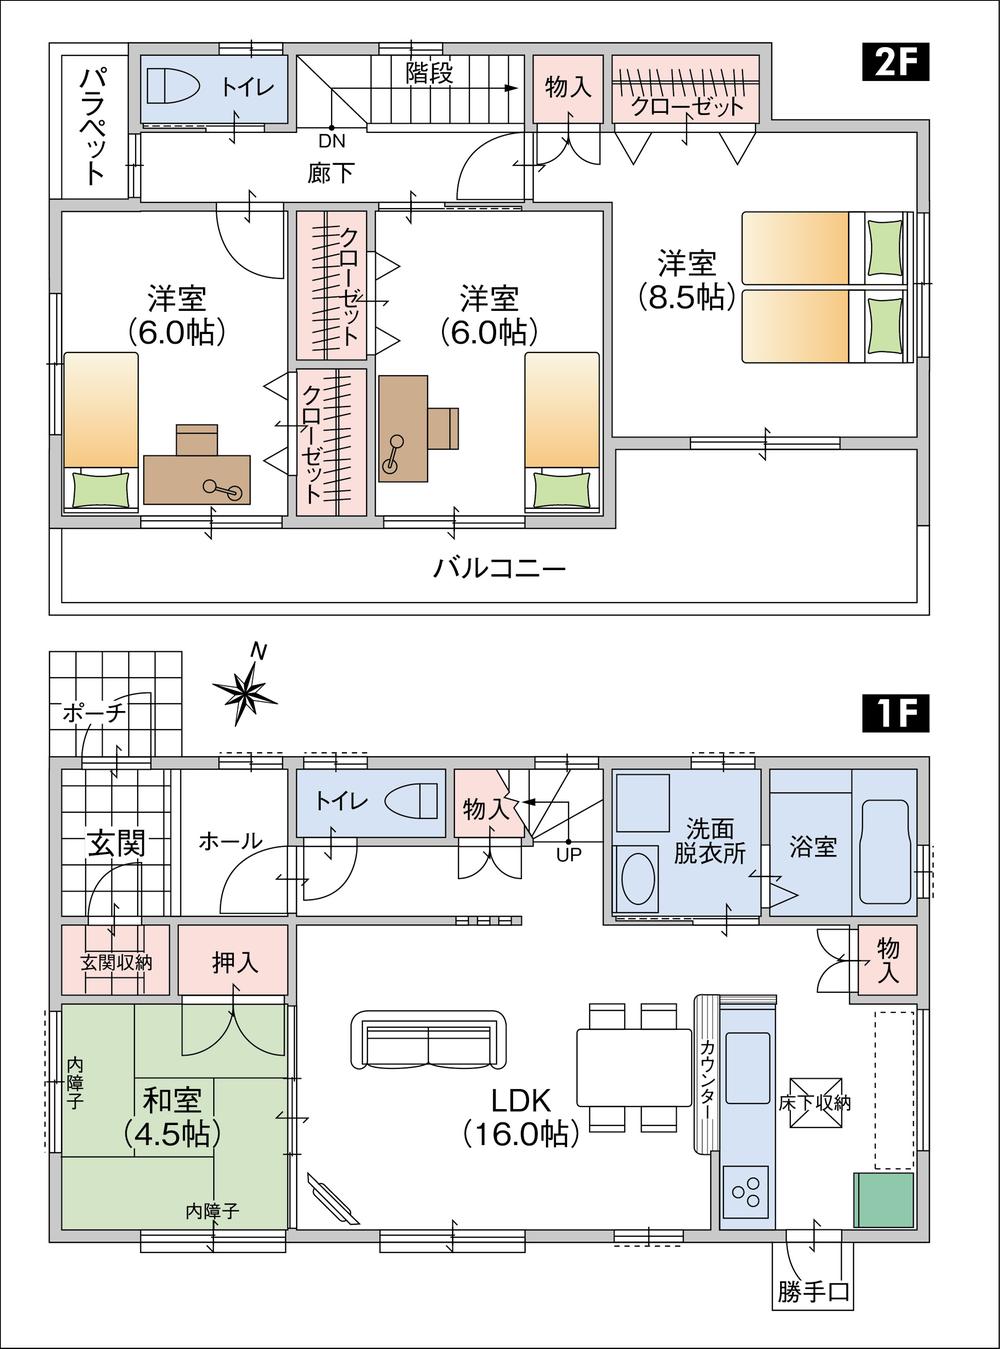 Building plan example (floor plan). Building plan example (B compartment) 4LDK, Land price 15.8 million yen, Land area 136.99 sq m , Building price 15.9 million yen, Building area 105.59 sq m